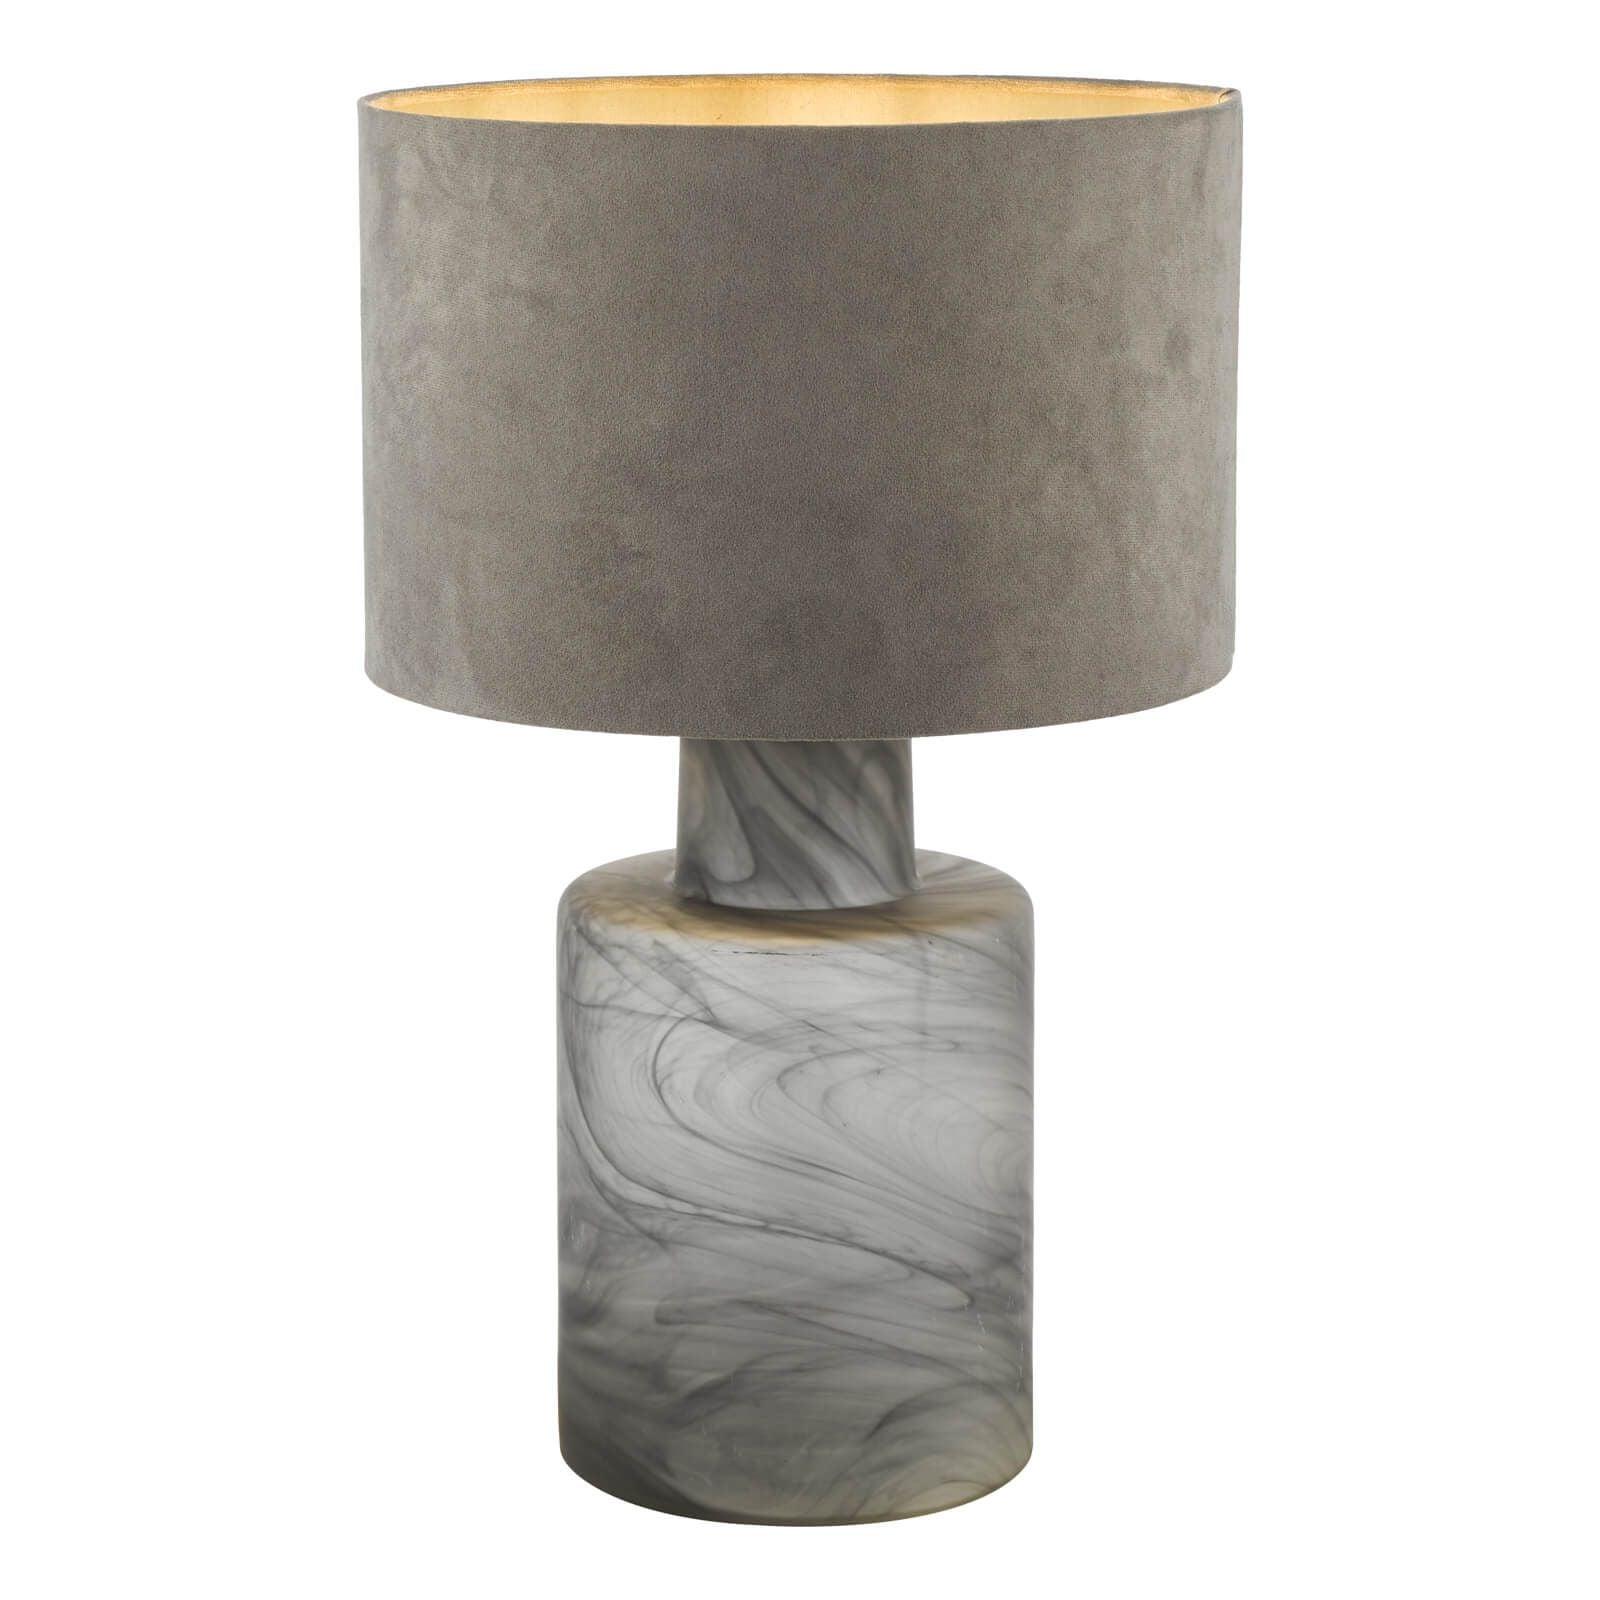 Wanda Table Lamp Smoked Glass With Shade